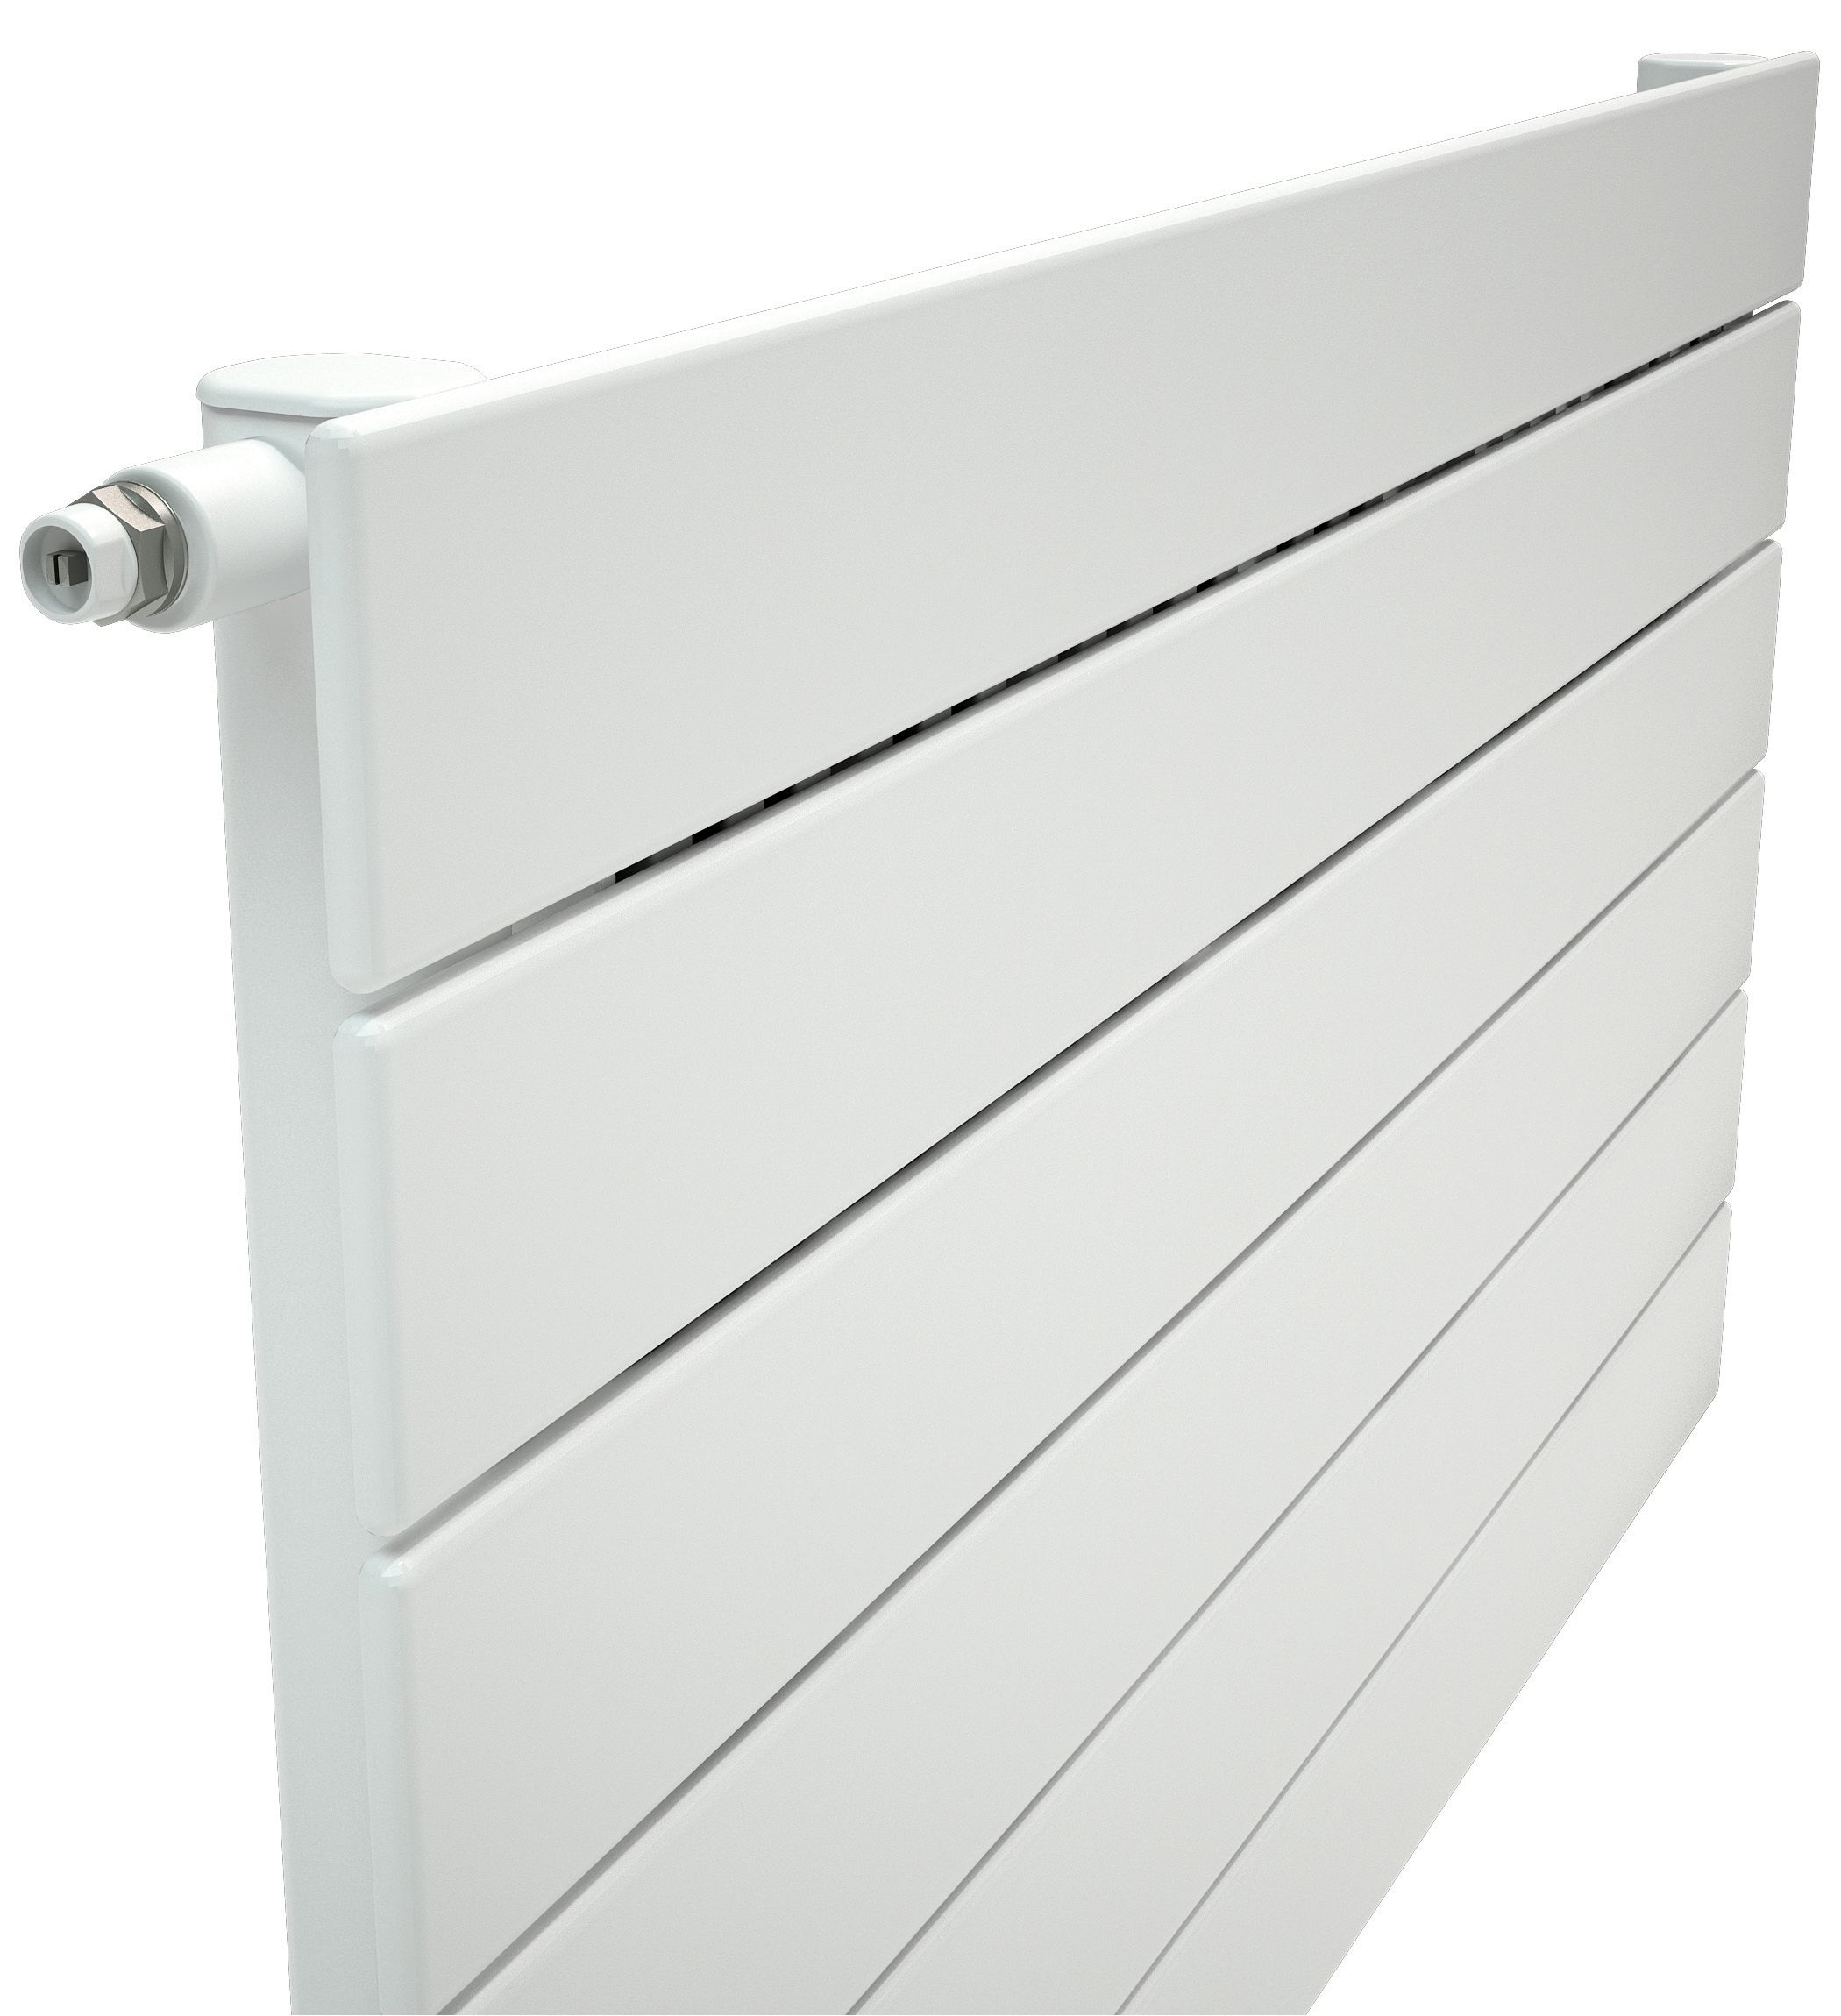 Image of Henrad Verona Single Panel Designer Radiator - White 592 x 1400 mm